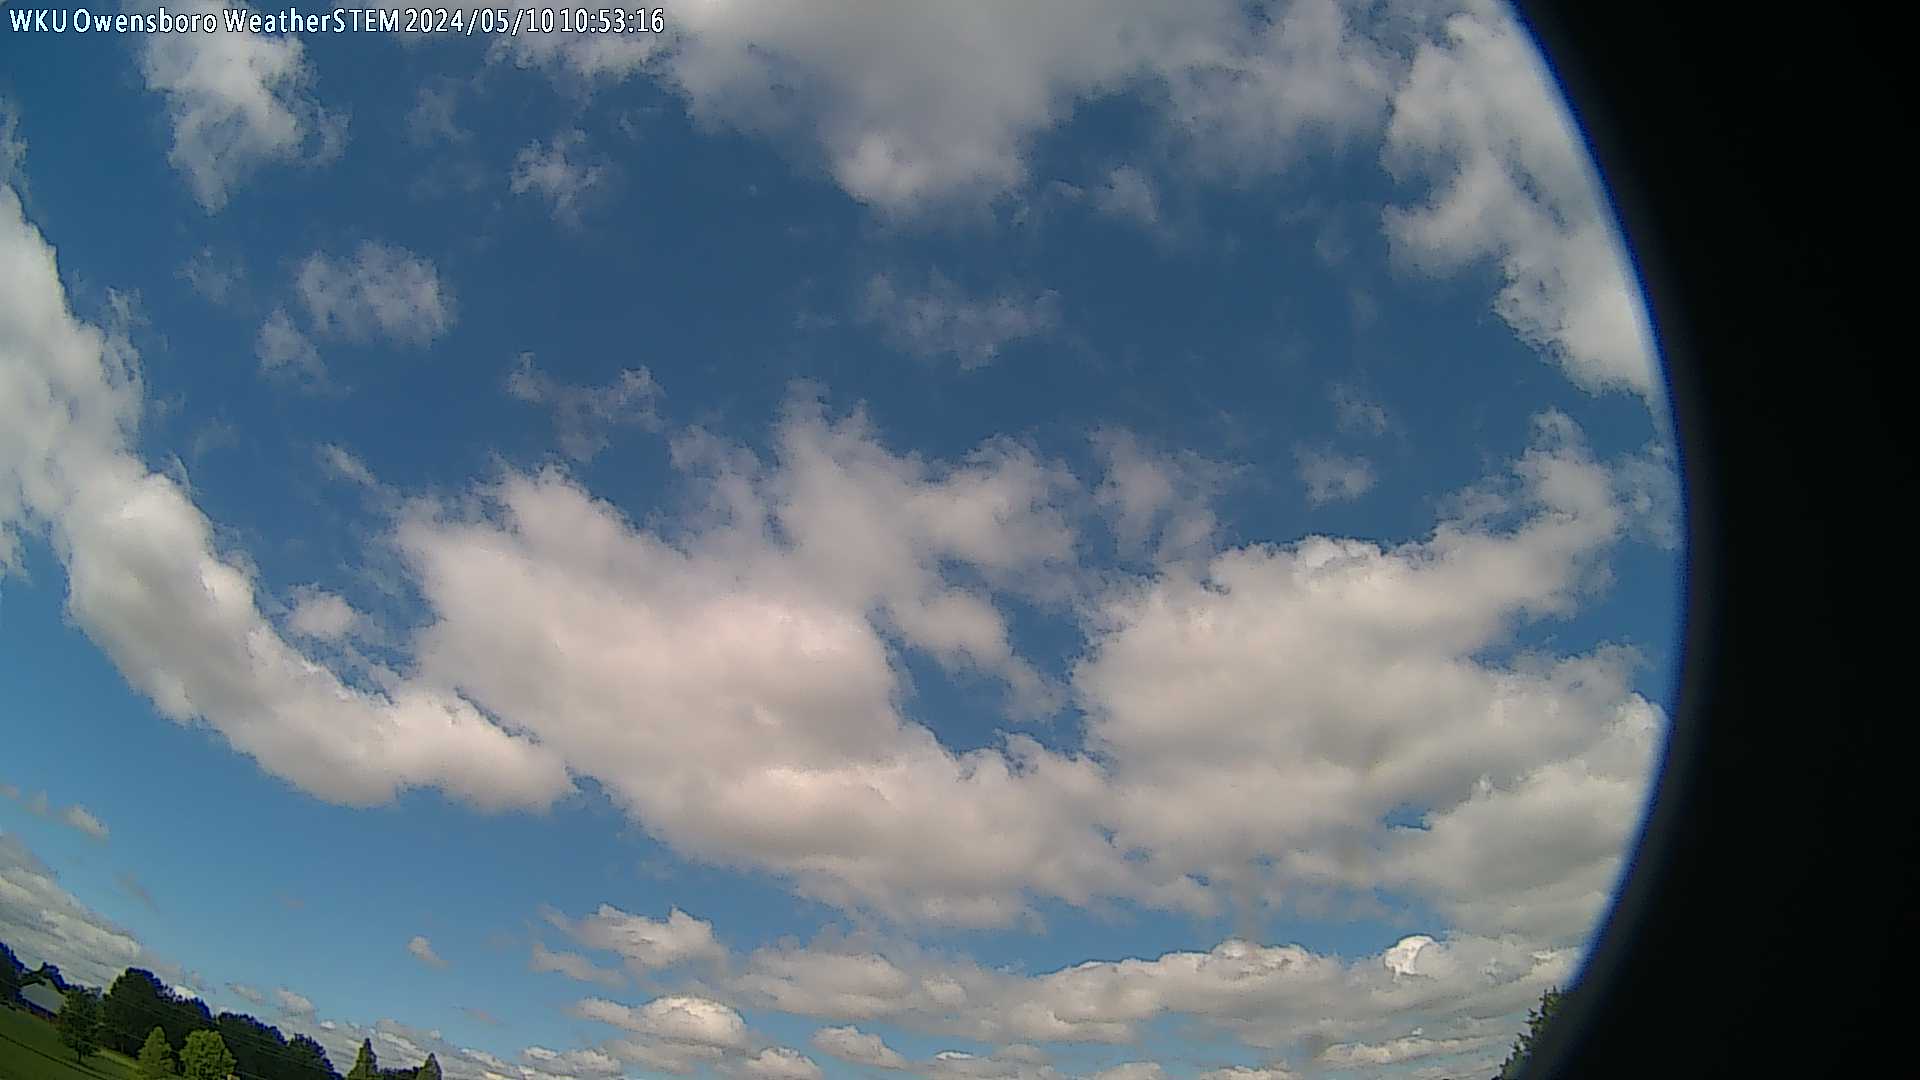 WeatherSTEM Cloud Camera WSWOwensboroWx in Daviess County, Kentucky KY at White Squirrel Weather, WKU Owensboro